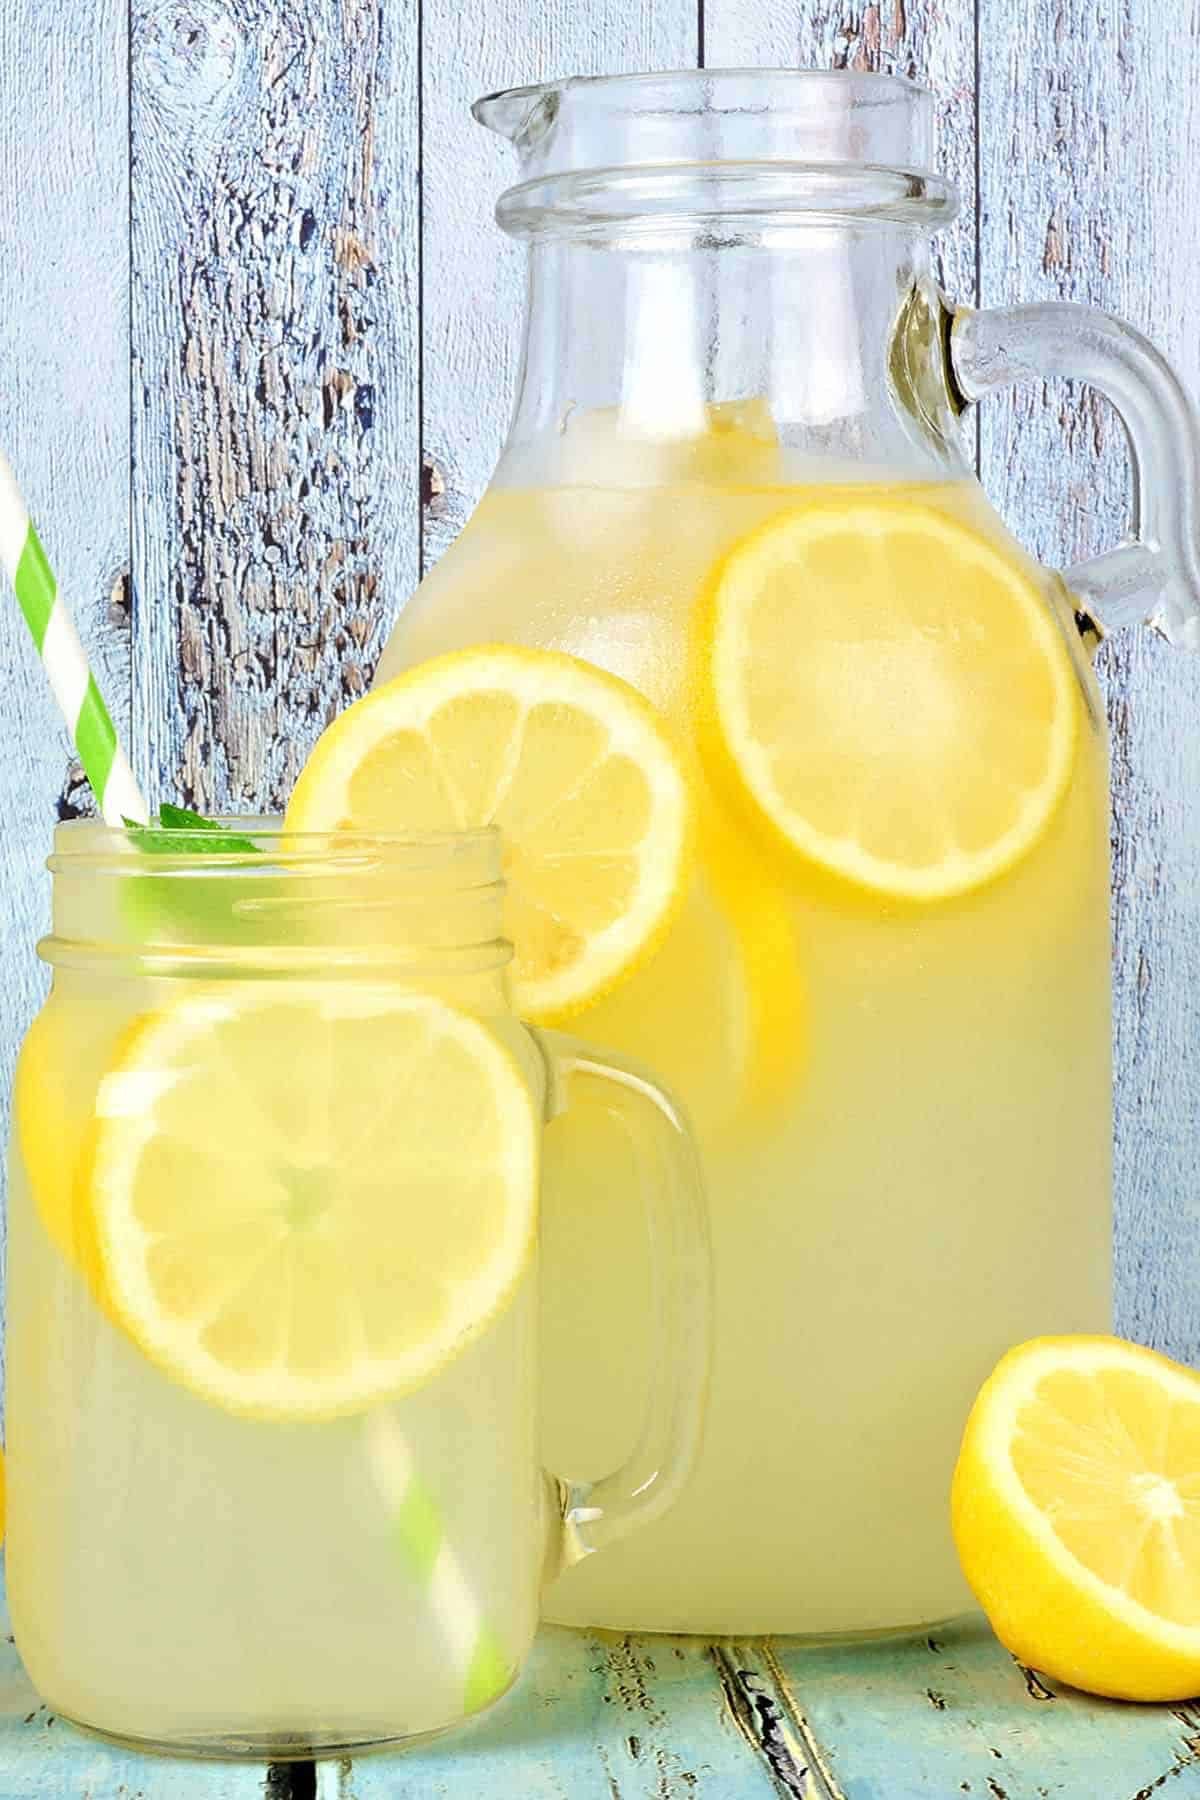 Pitcher with two glasses of homemade lemonade and fresh lemons.